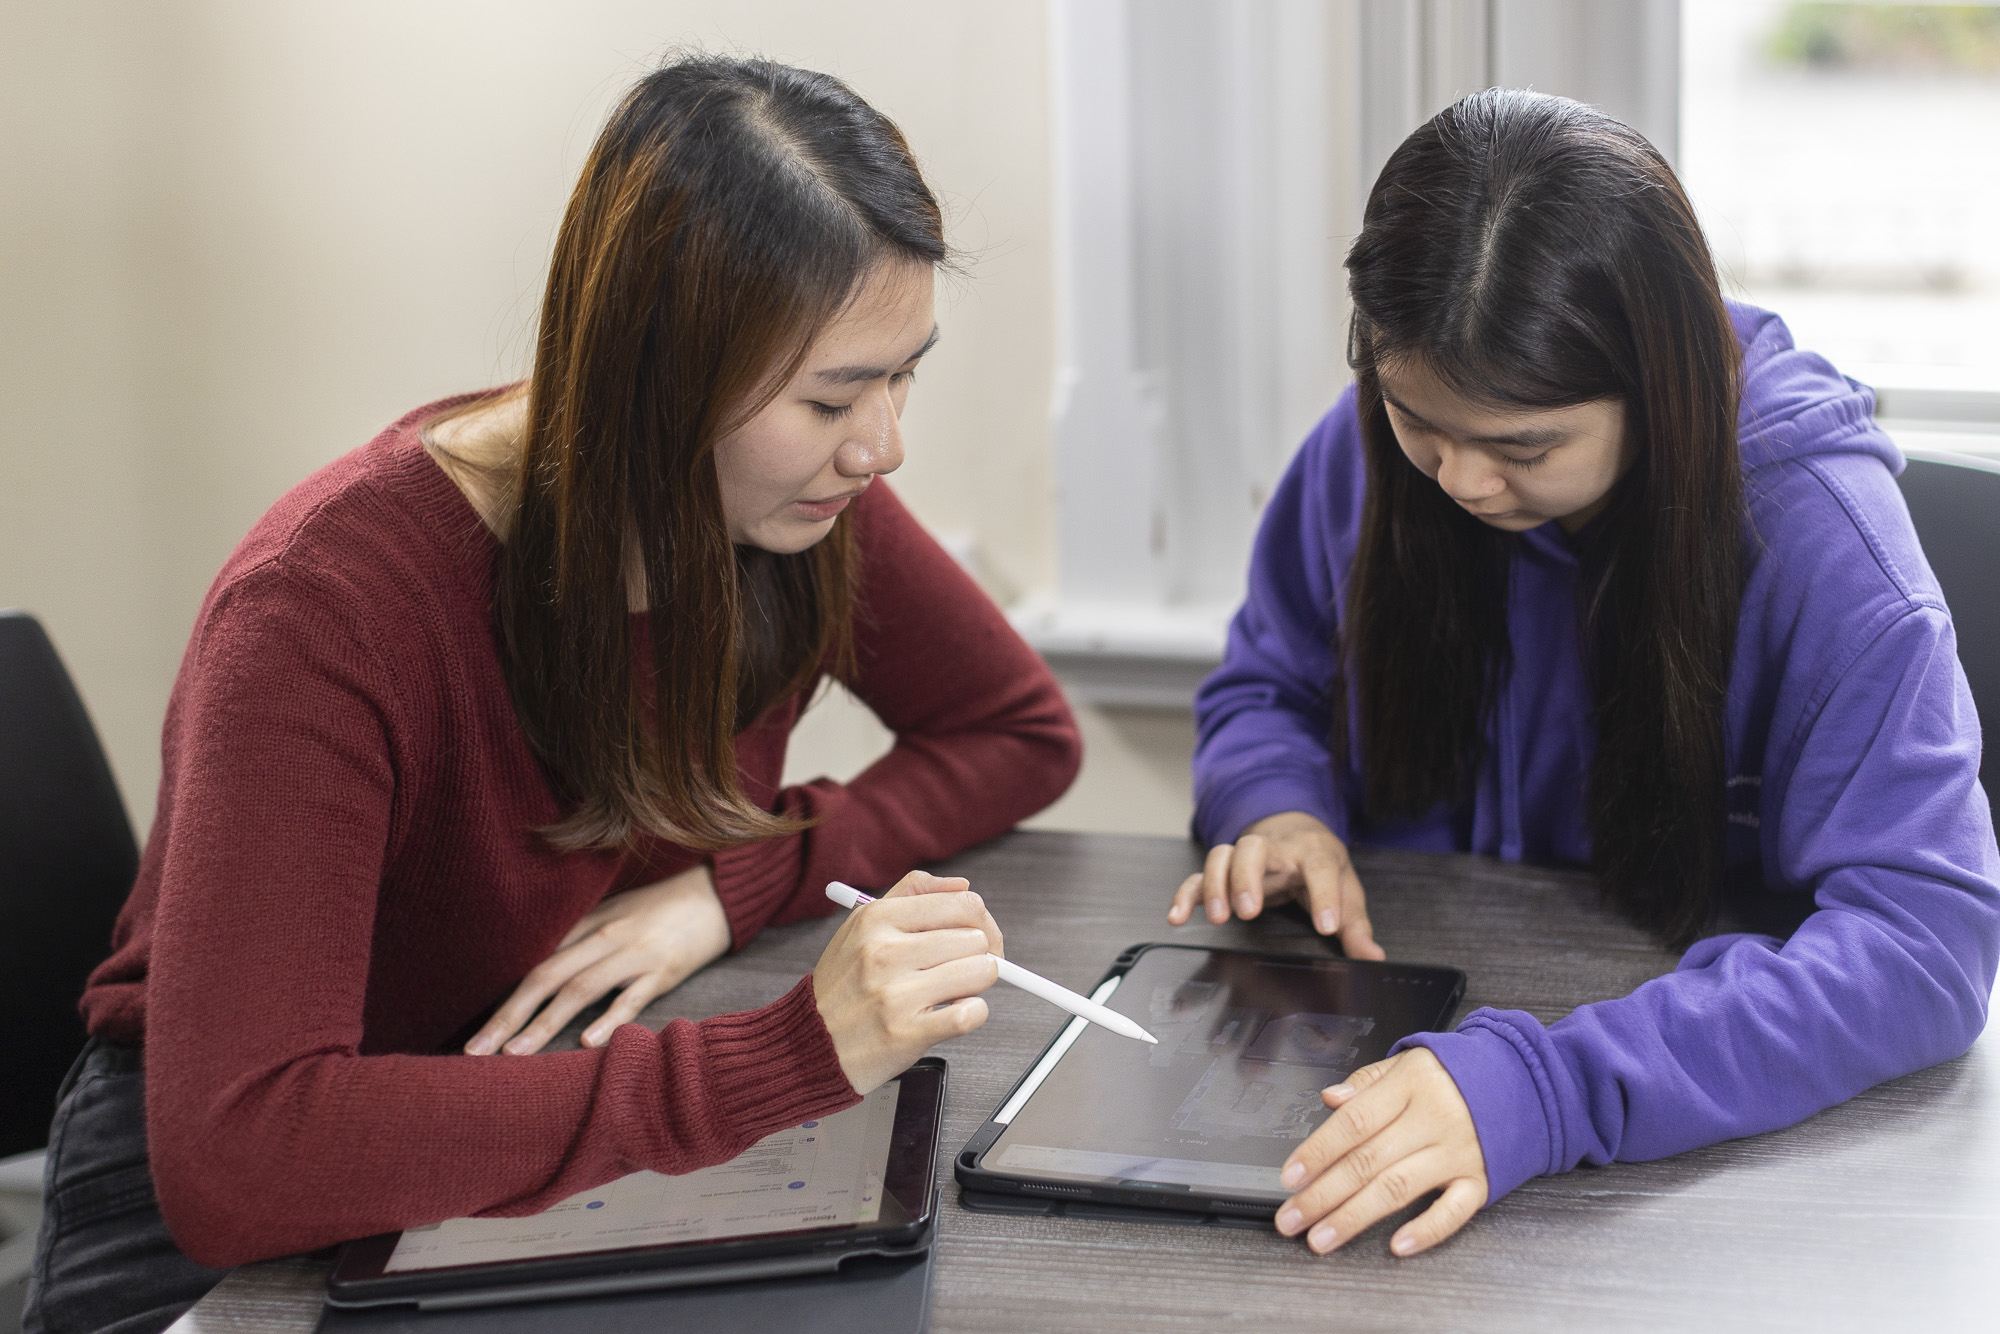 Students writing on an ipad